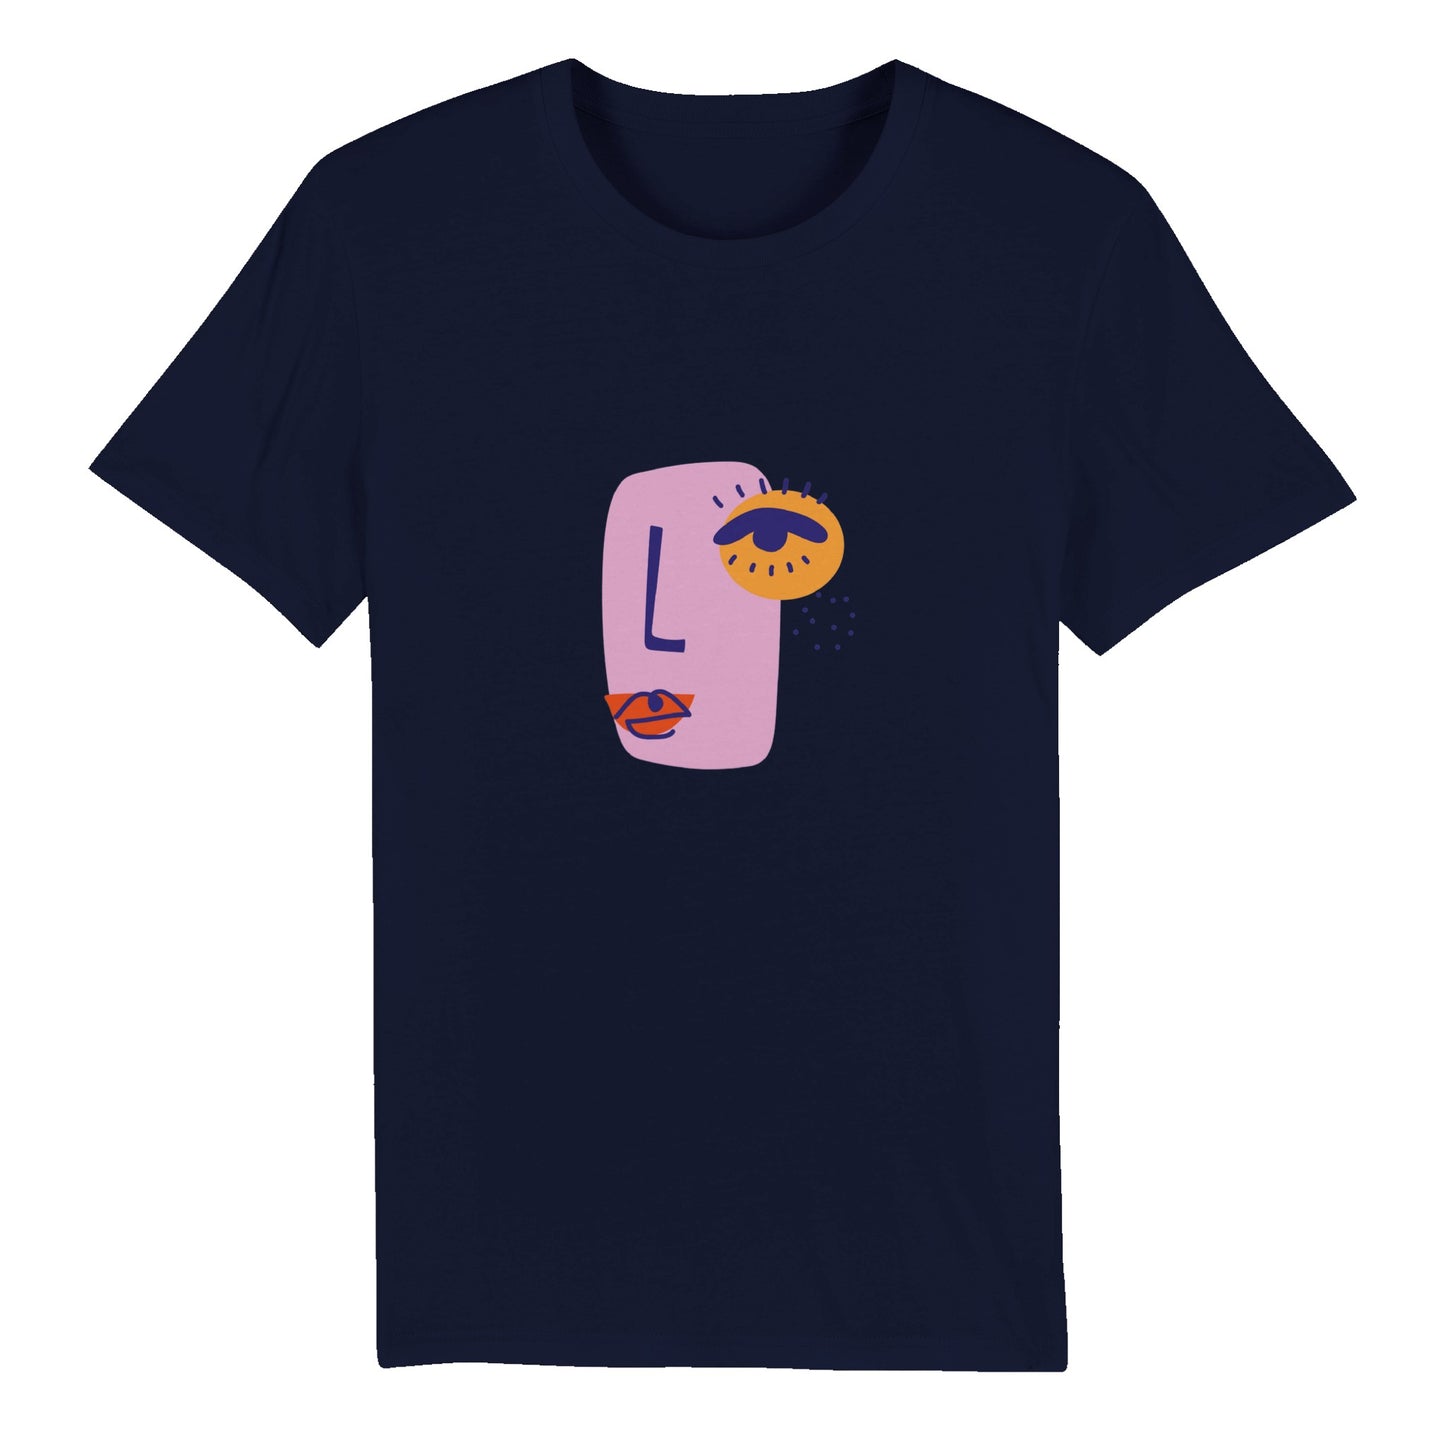 100% Organic Unisex T-shirt/Abstract-Face